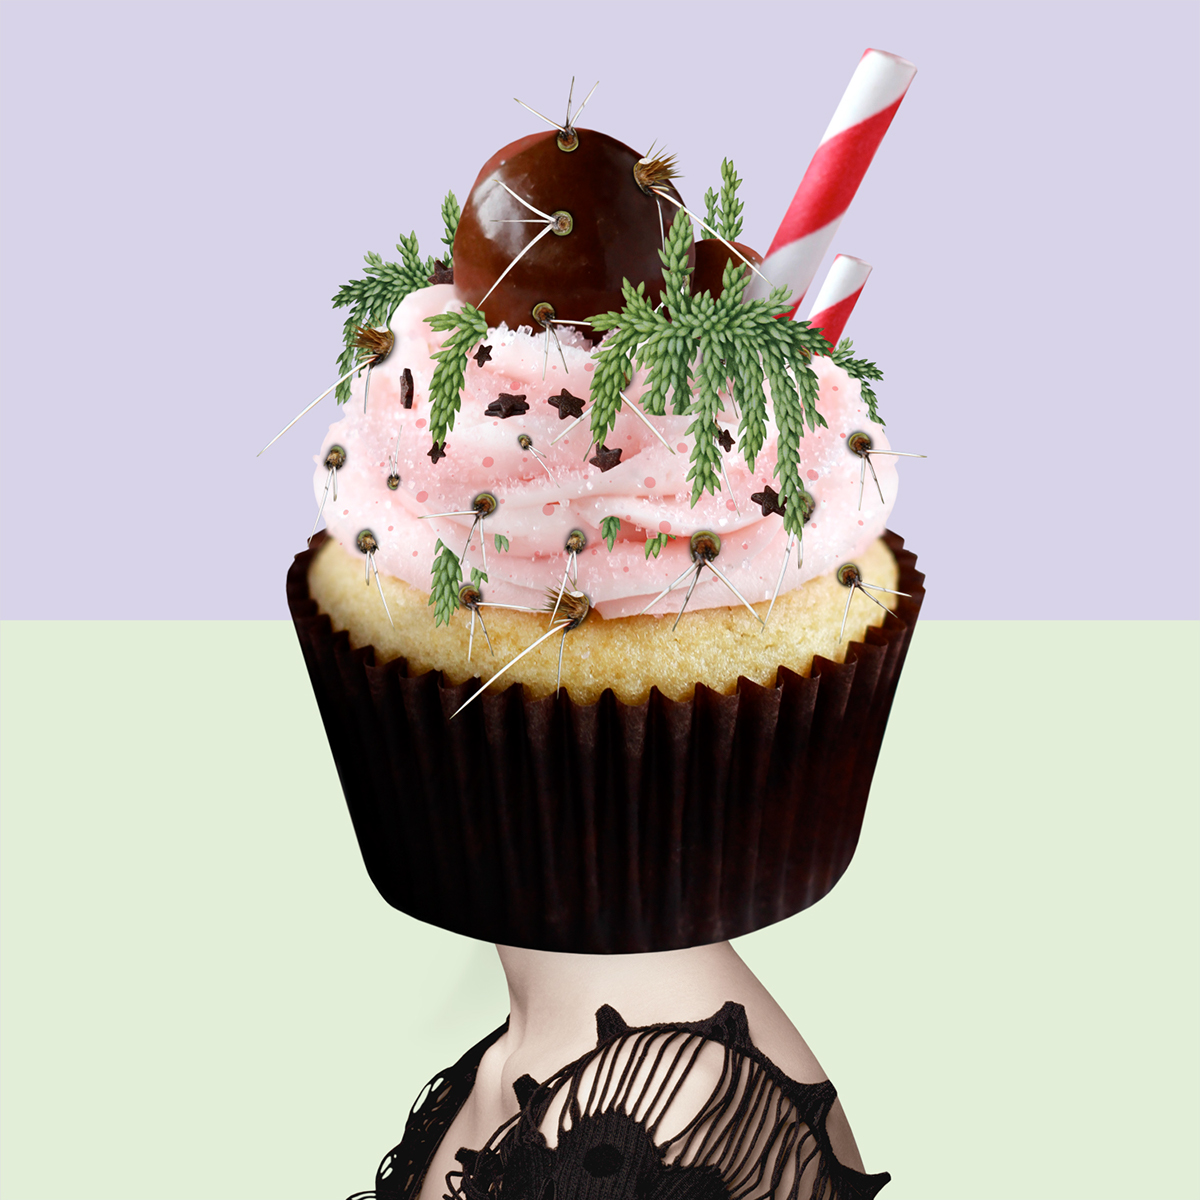 cupcake Food  popart pop modern art Illustrator rad dope vintage Retro cult chic highend pinup